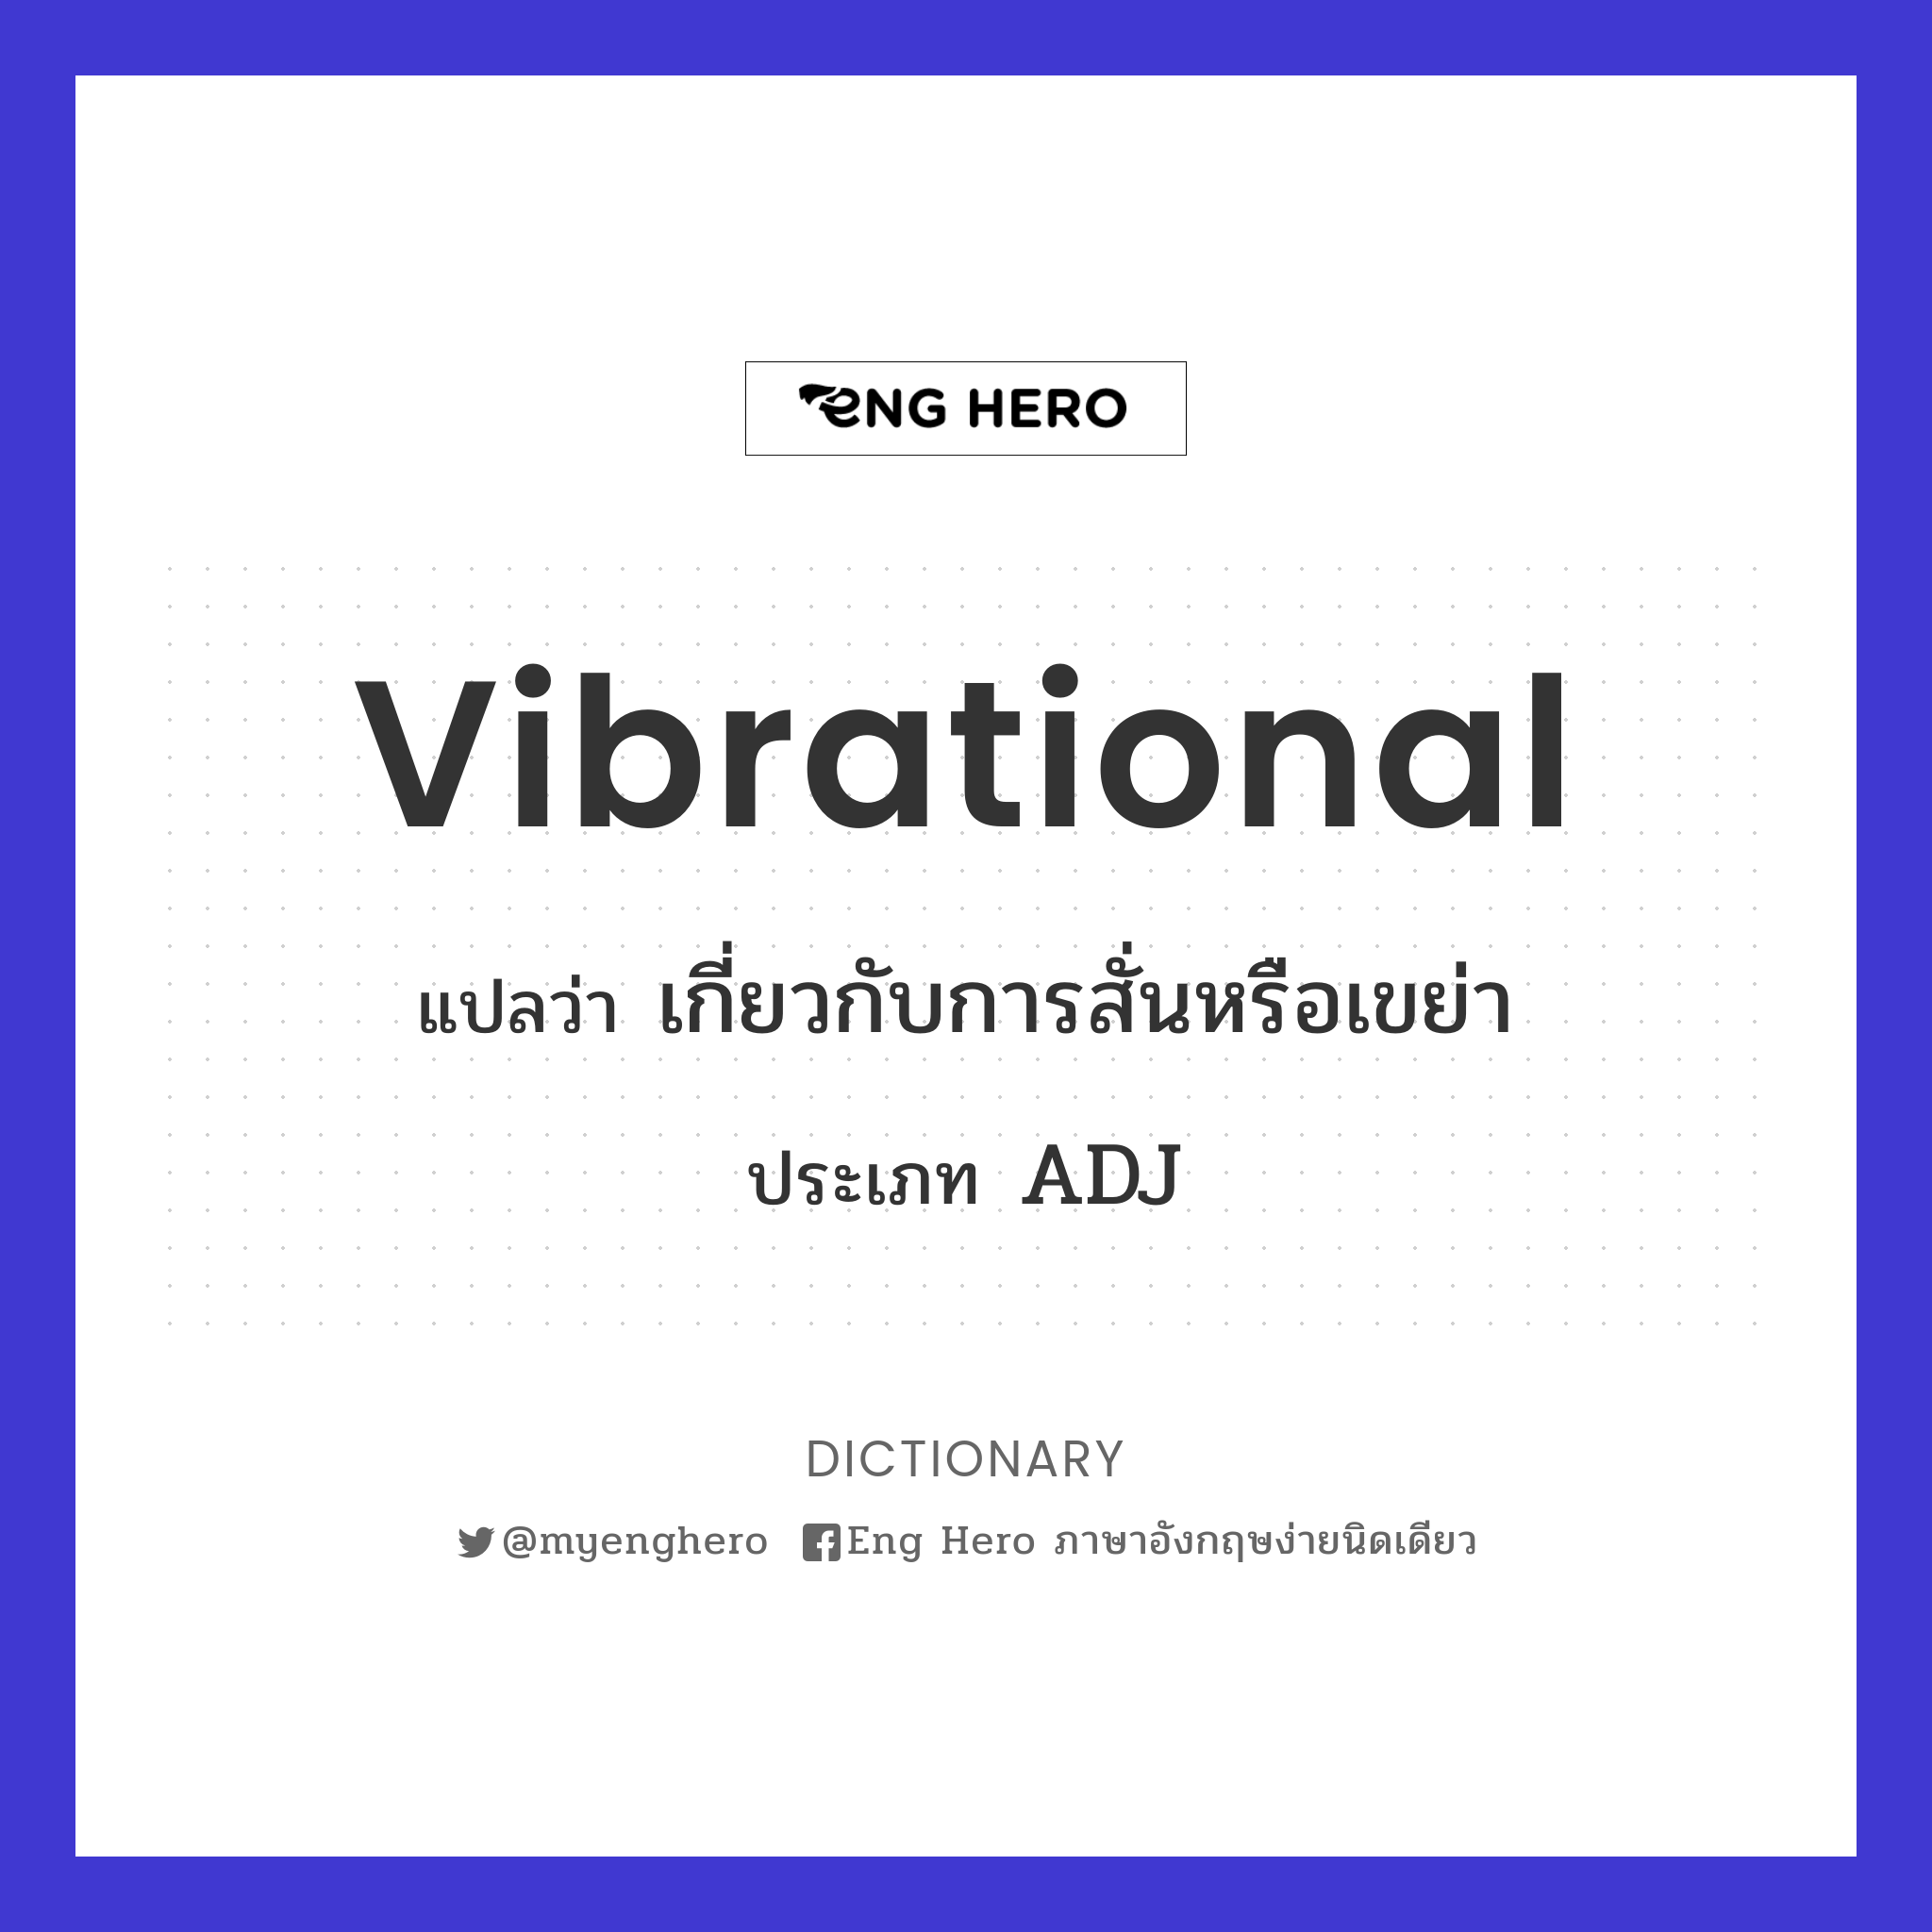 vibrational